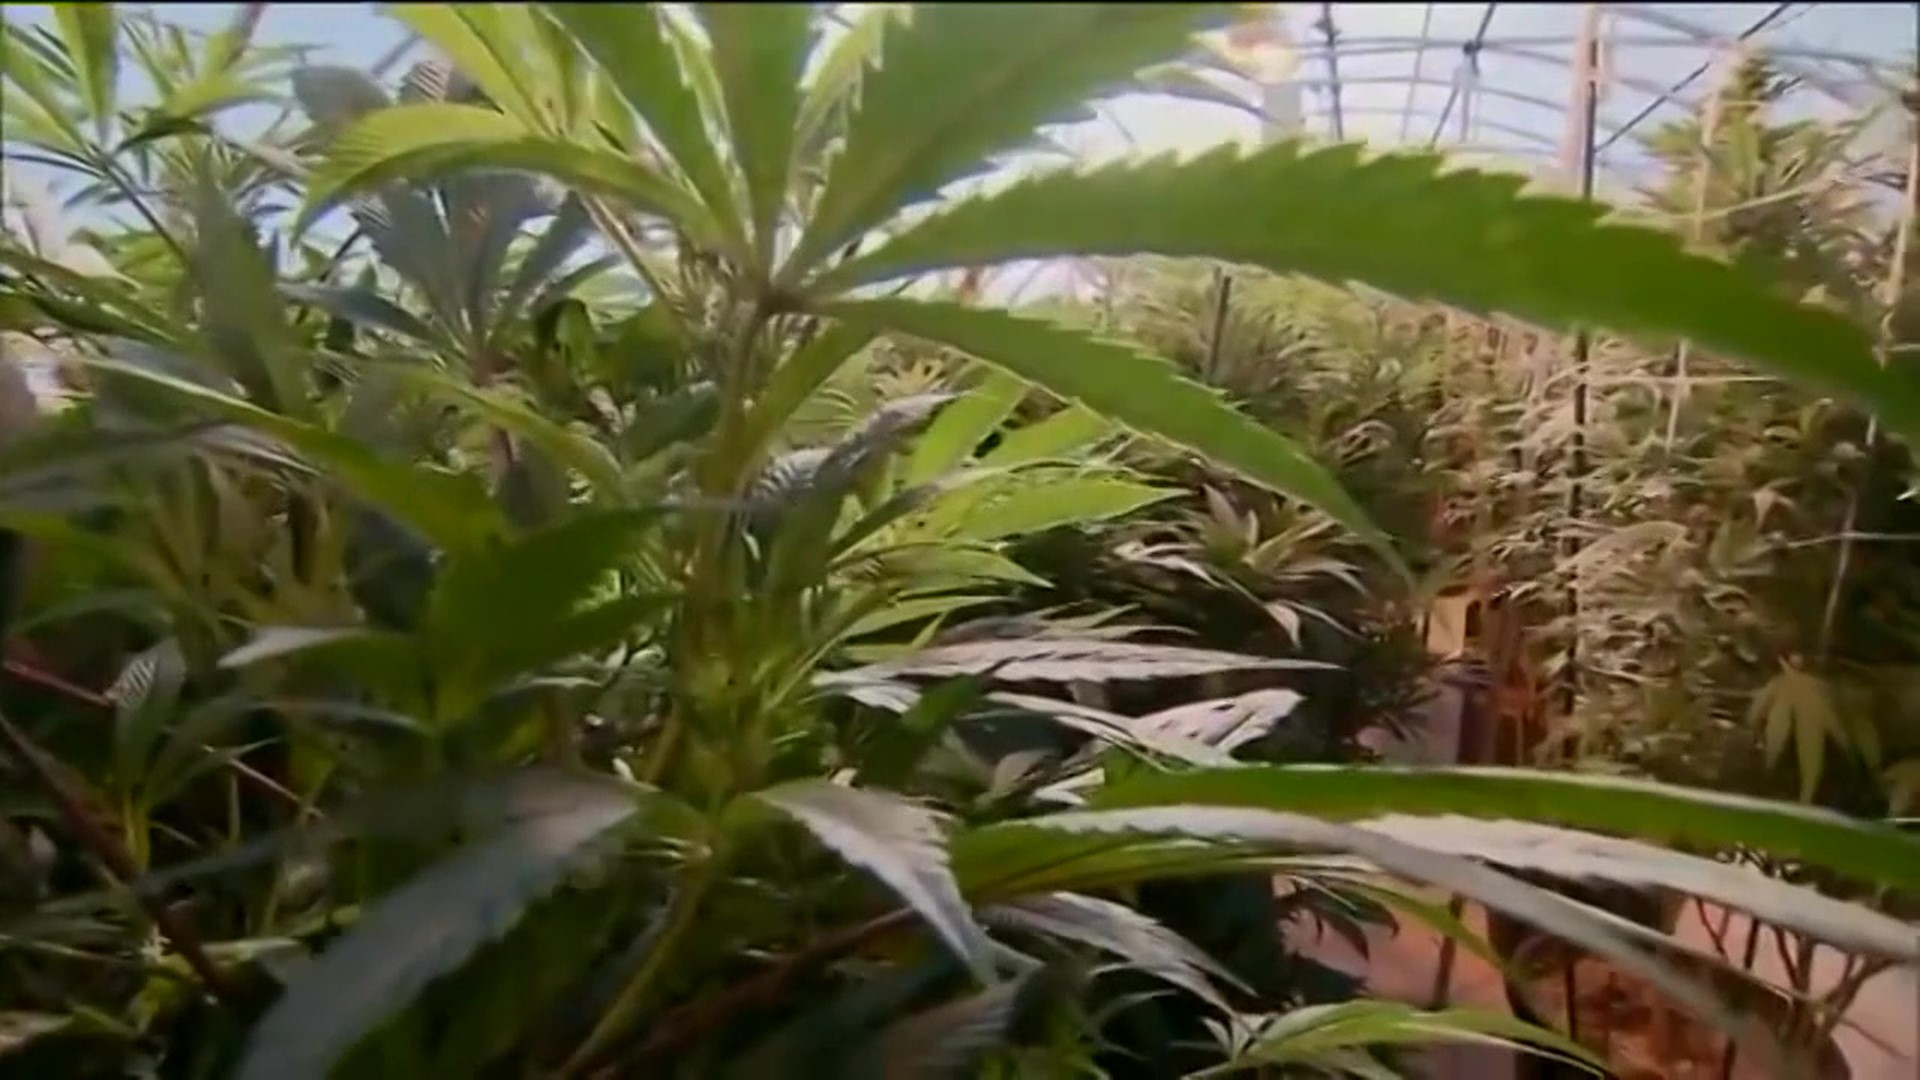 Some think it's time for the Pennsylvania legislature to make recreational marijuana legal.